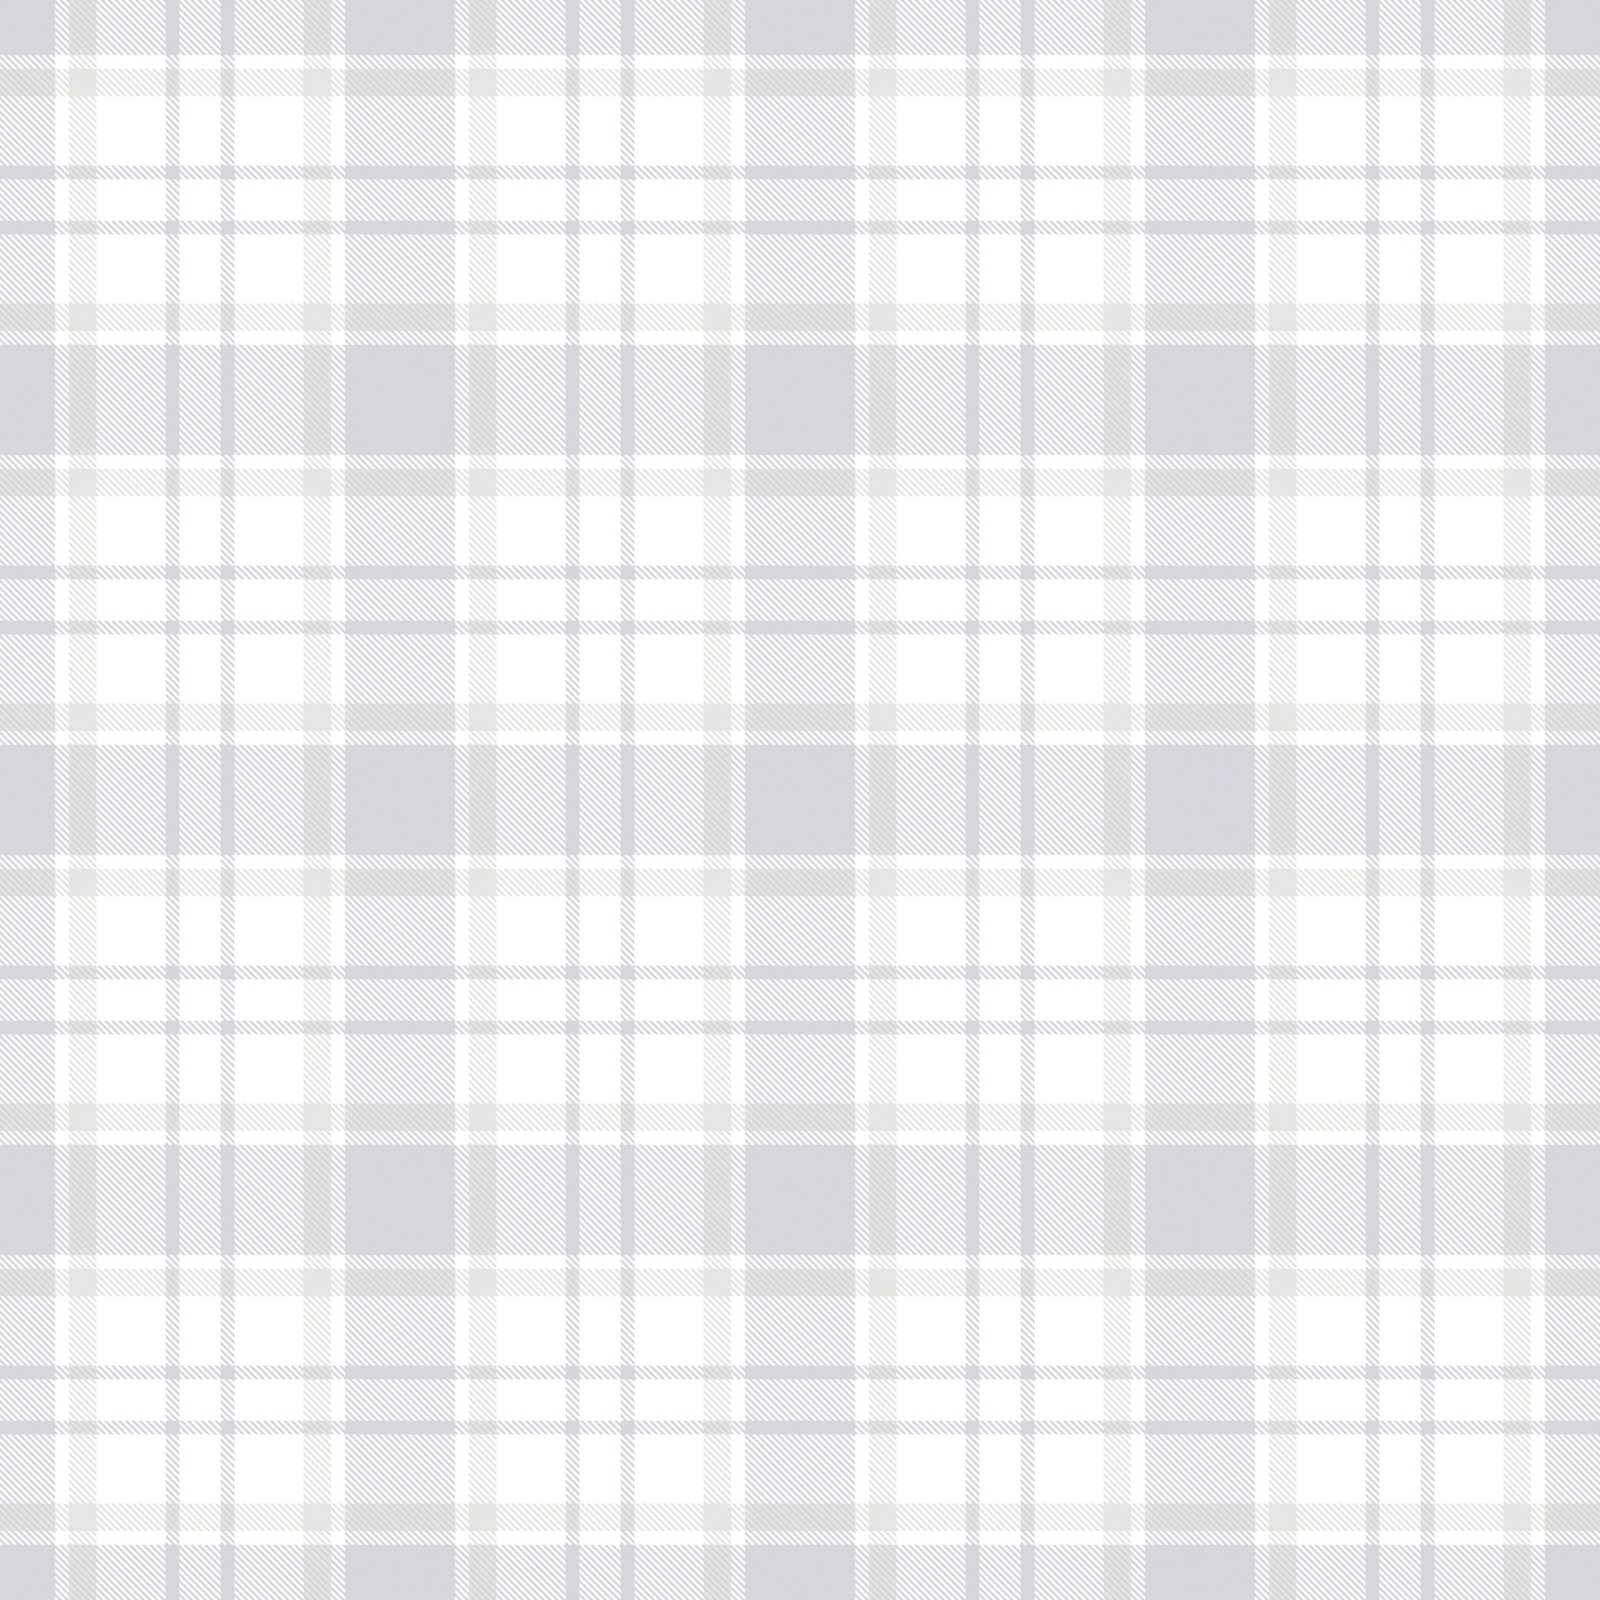 Tapete Kinderzimmer Tartan-Muster – Beige, Grau, Weiß
